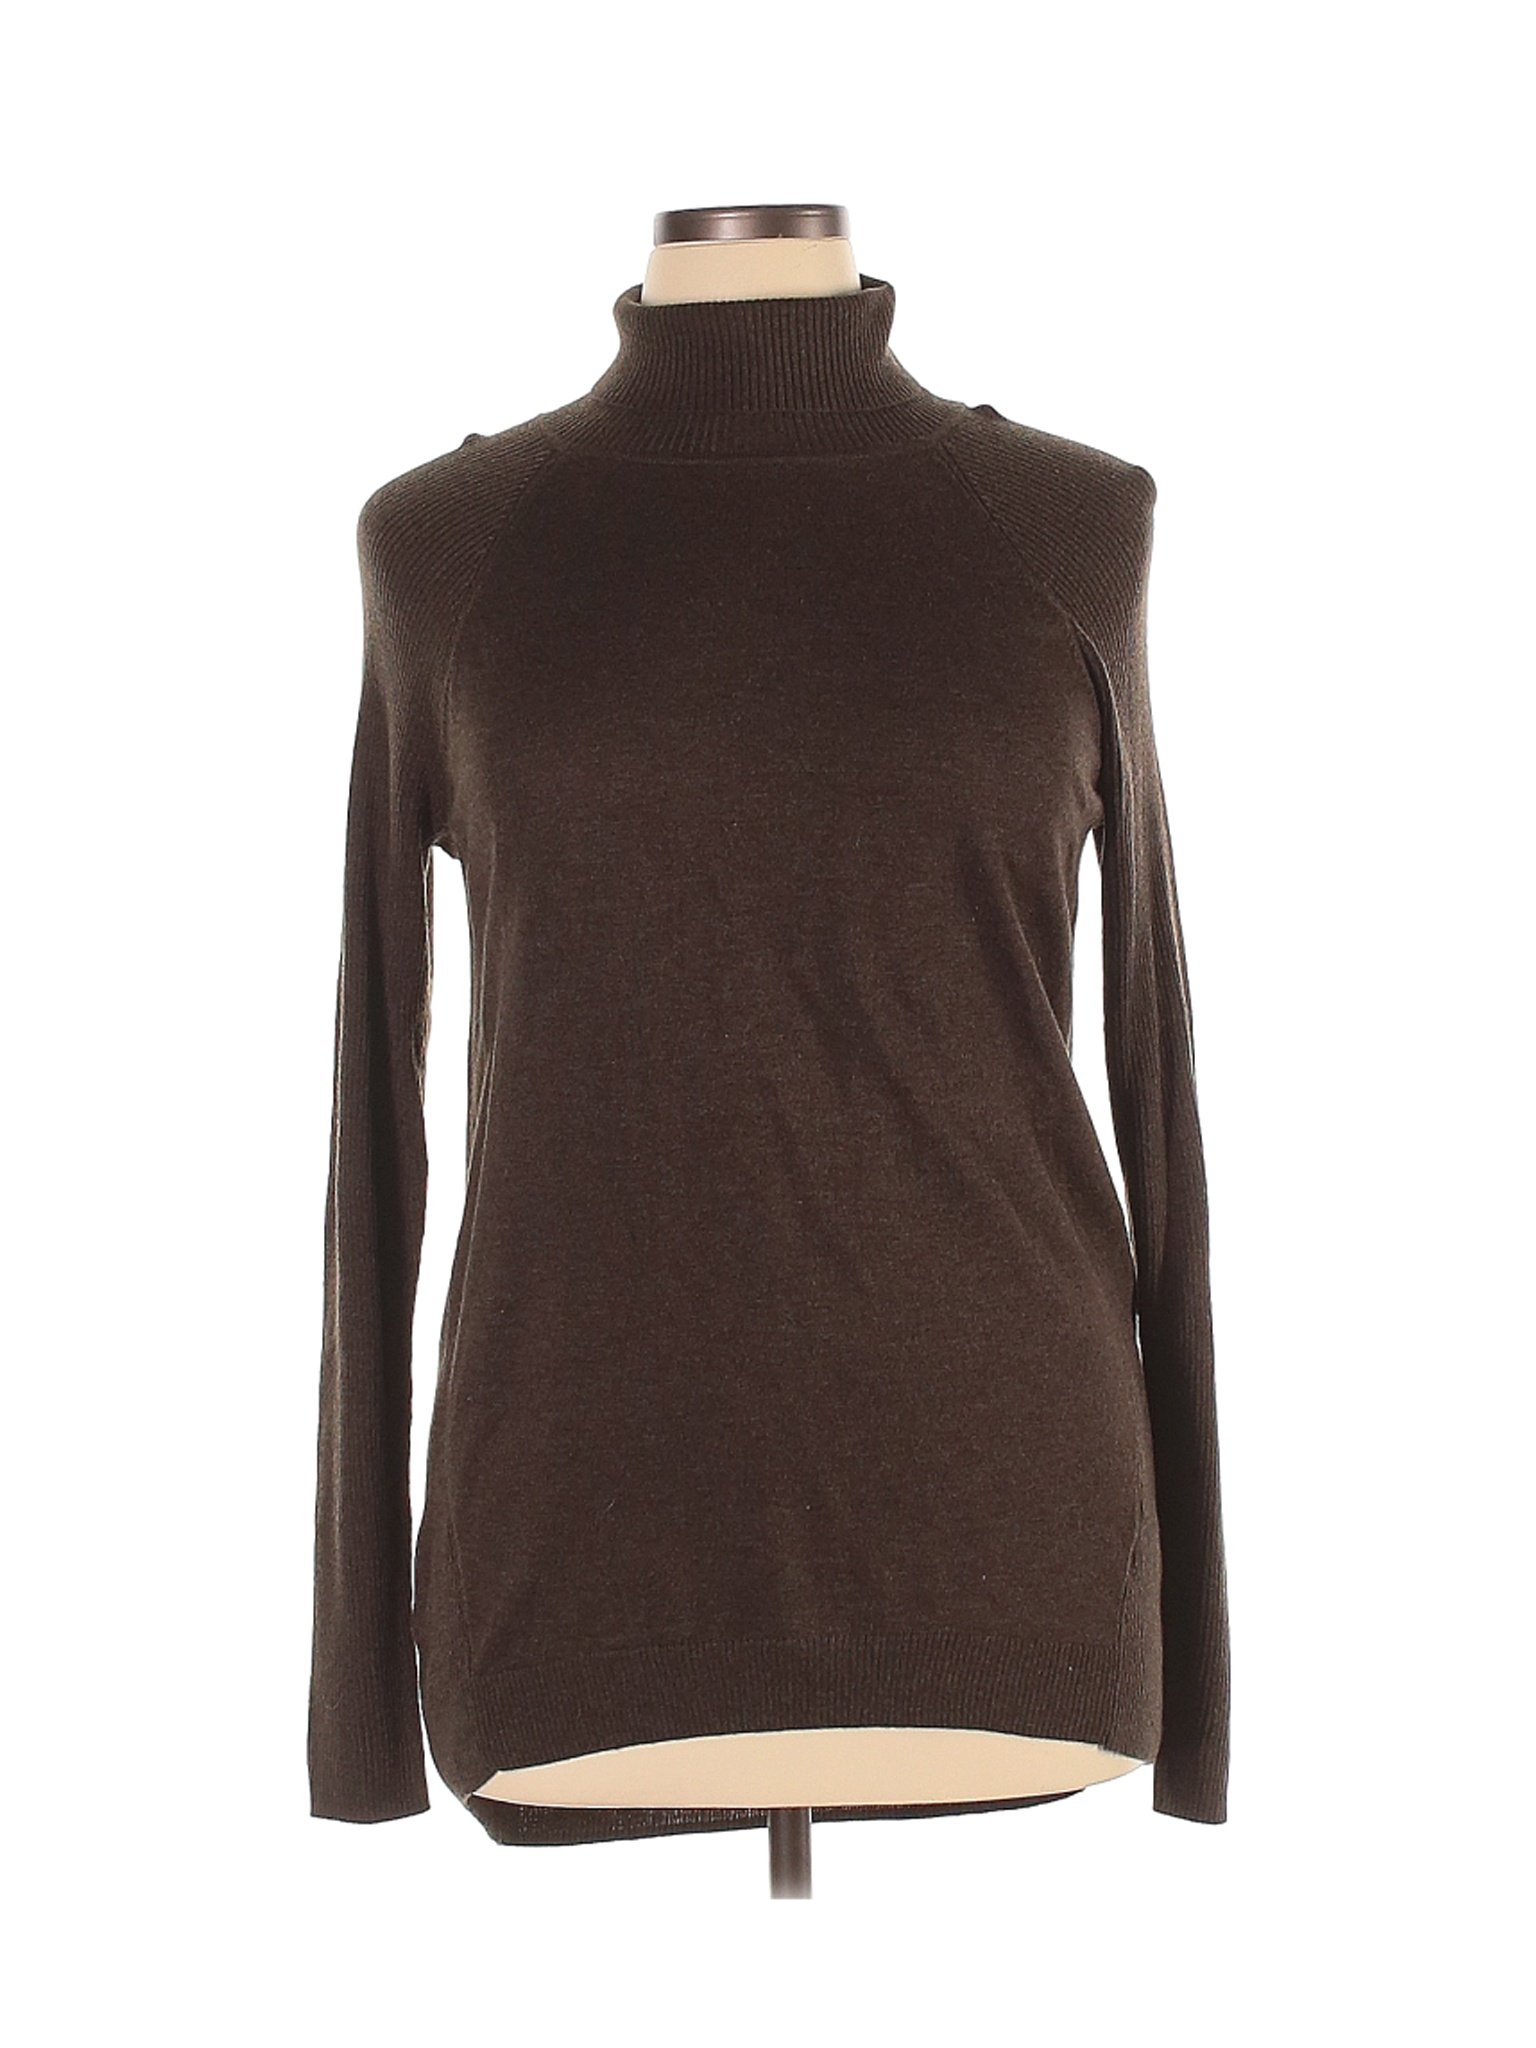 NWT Apt. 9 Women Brown Turtleneck Sweater XL | eBay